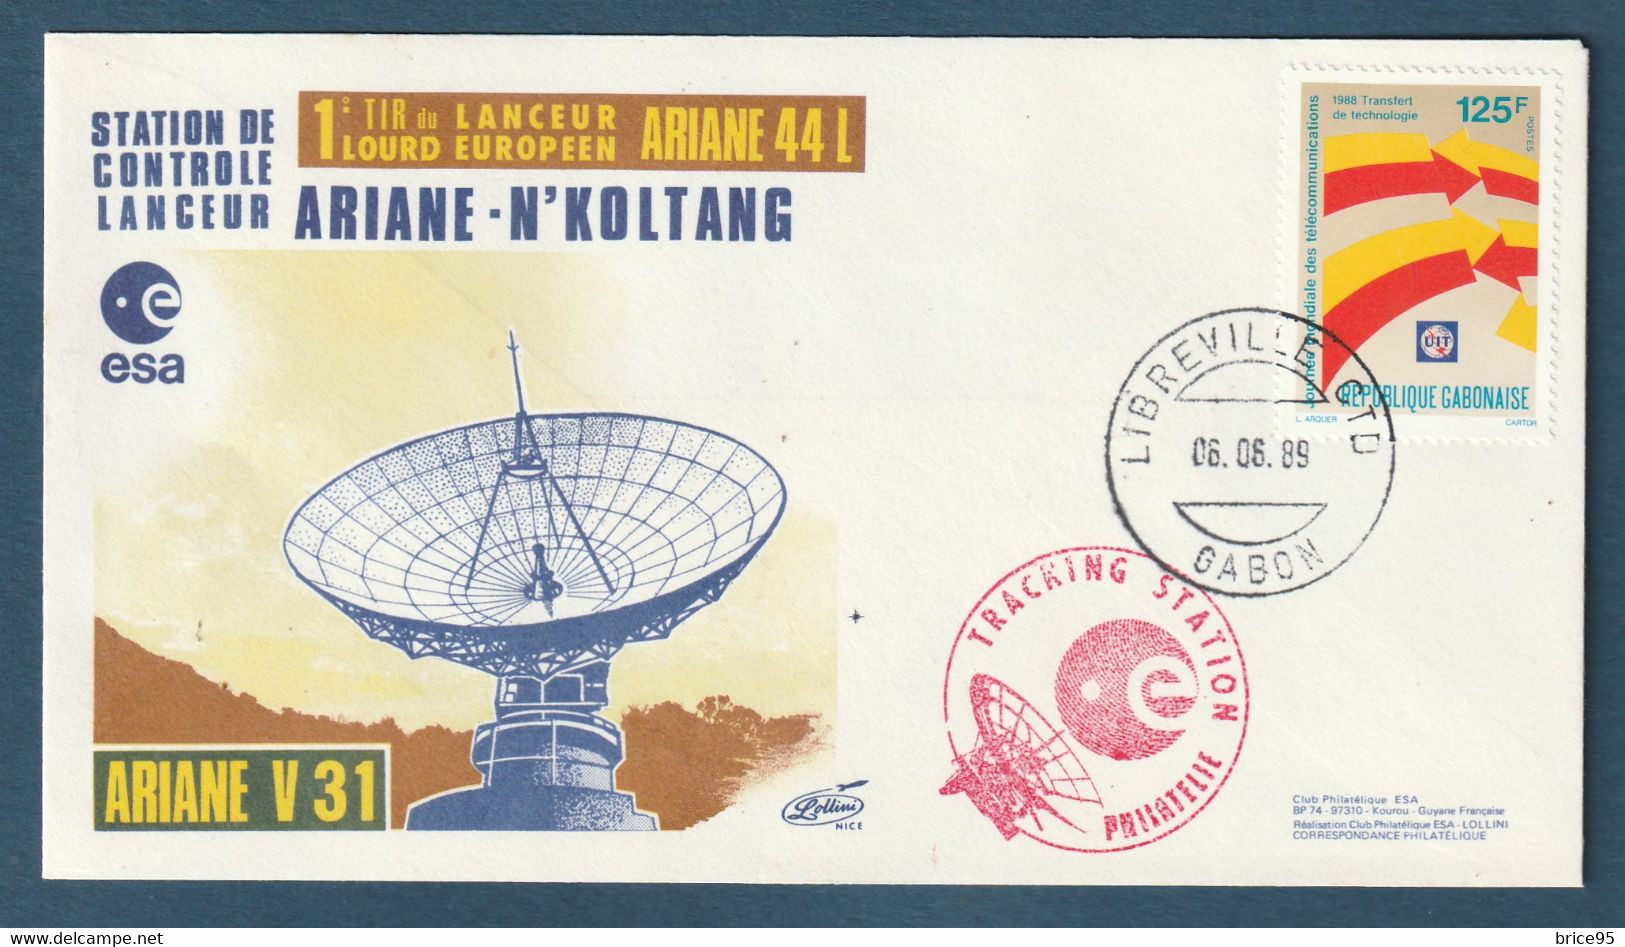 ✈️ Gabon - V31 Ariane 1 Er Tir Du Lanceur Lourd Européen - Ariane 44L - N'Koltang - 1989 ✈️ - Africa